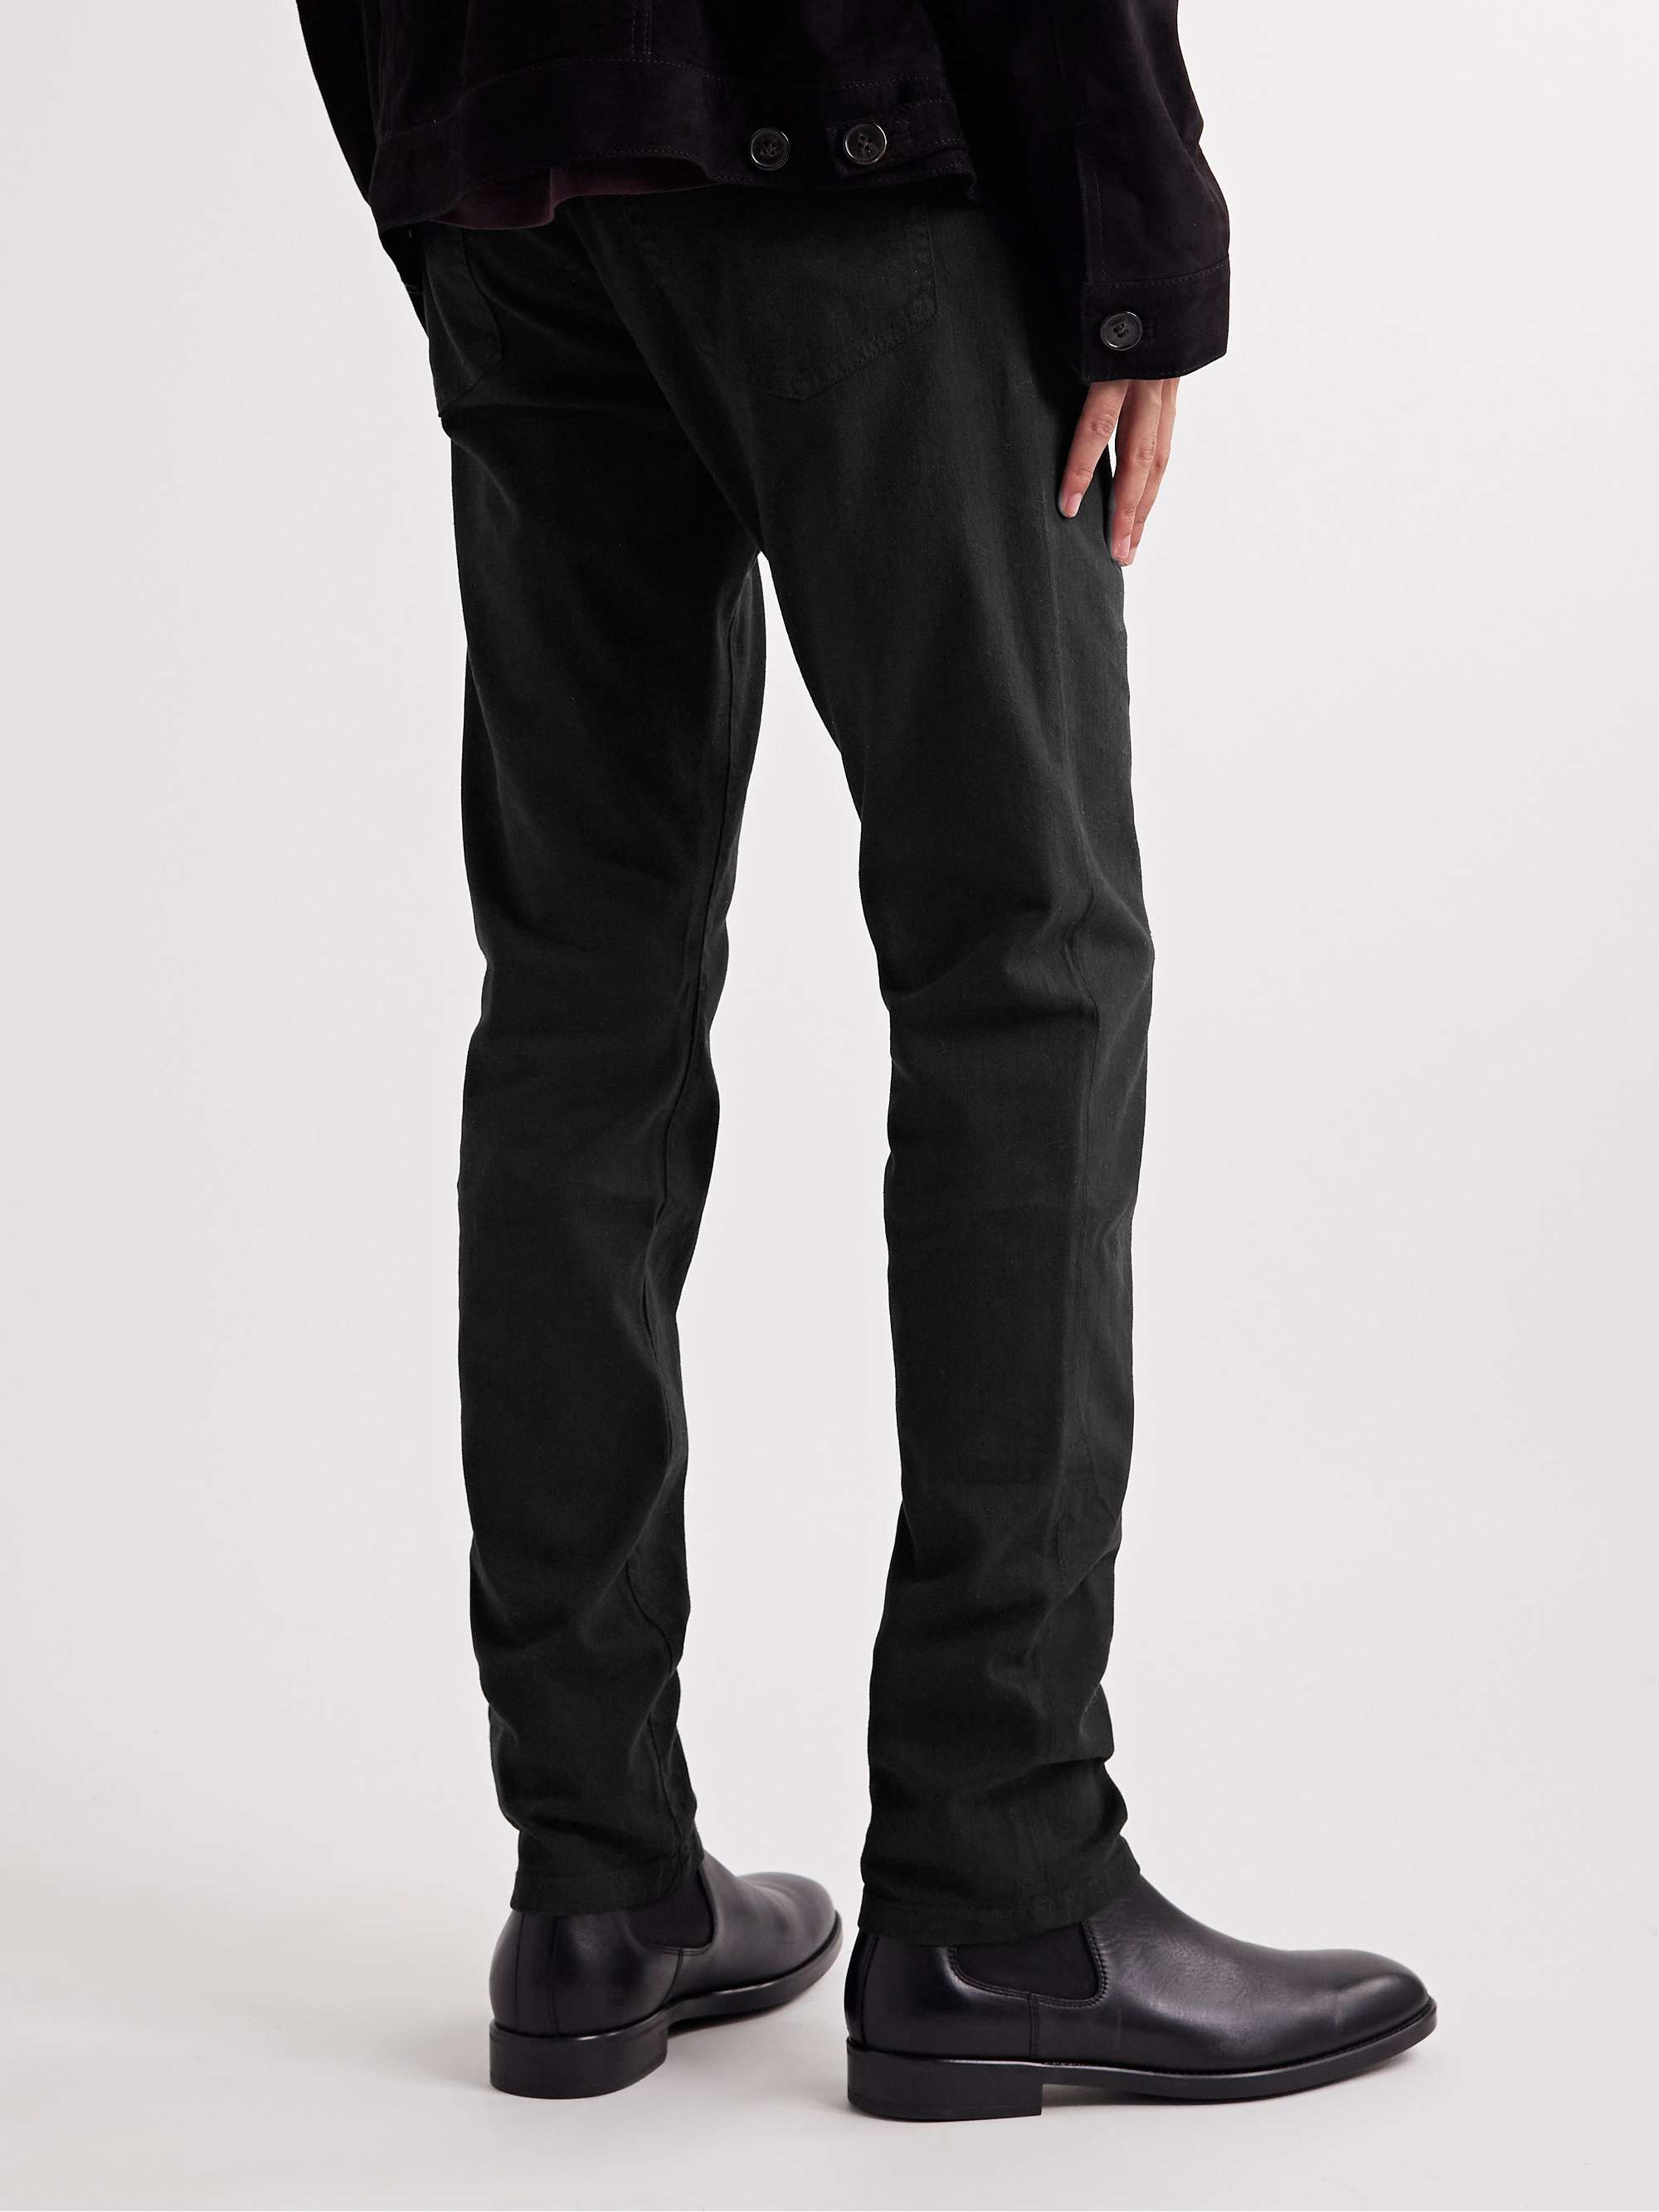 Black City Slim-Fit Jeans | ZEGNA | MR PORTER